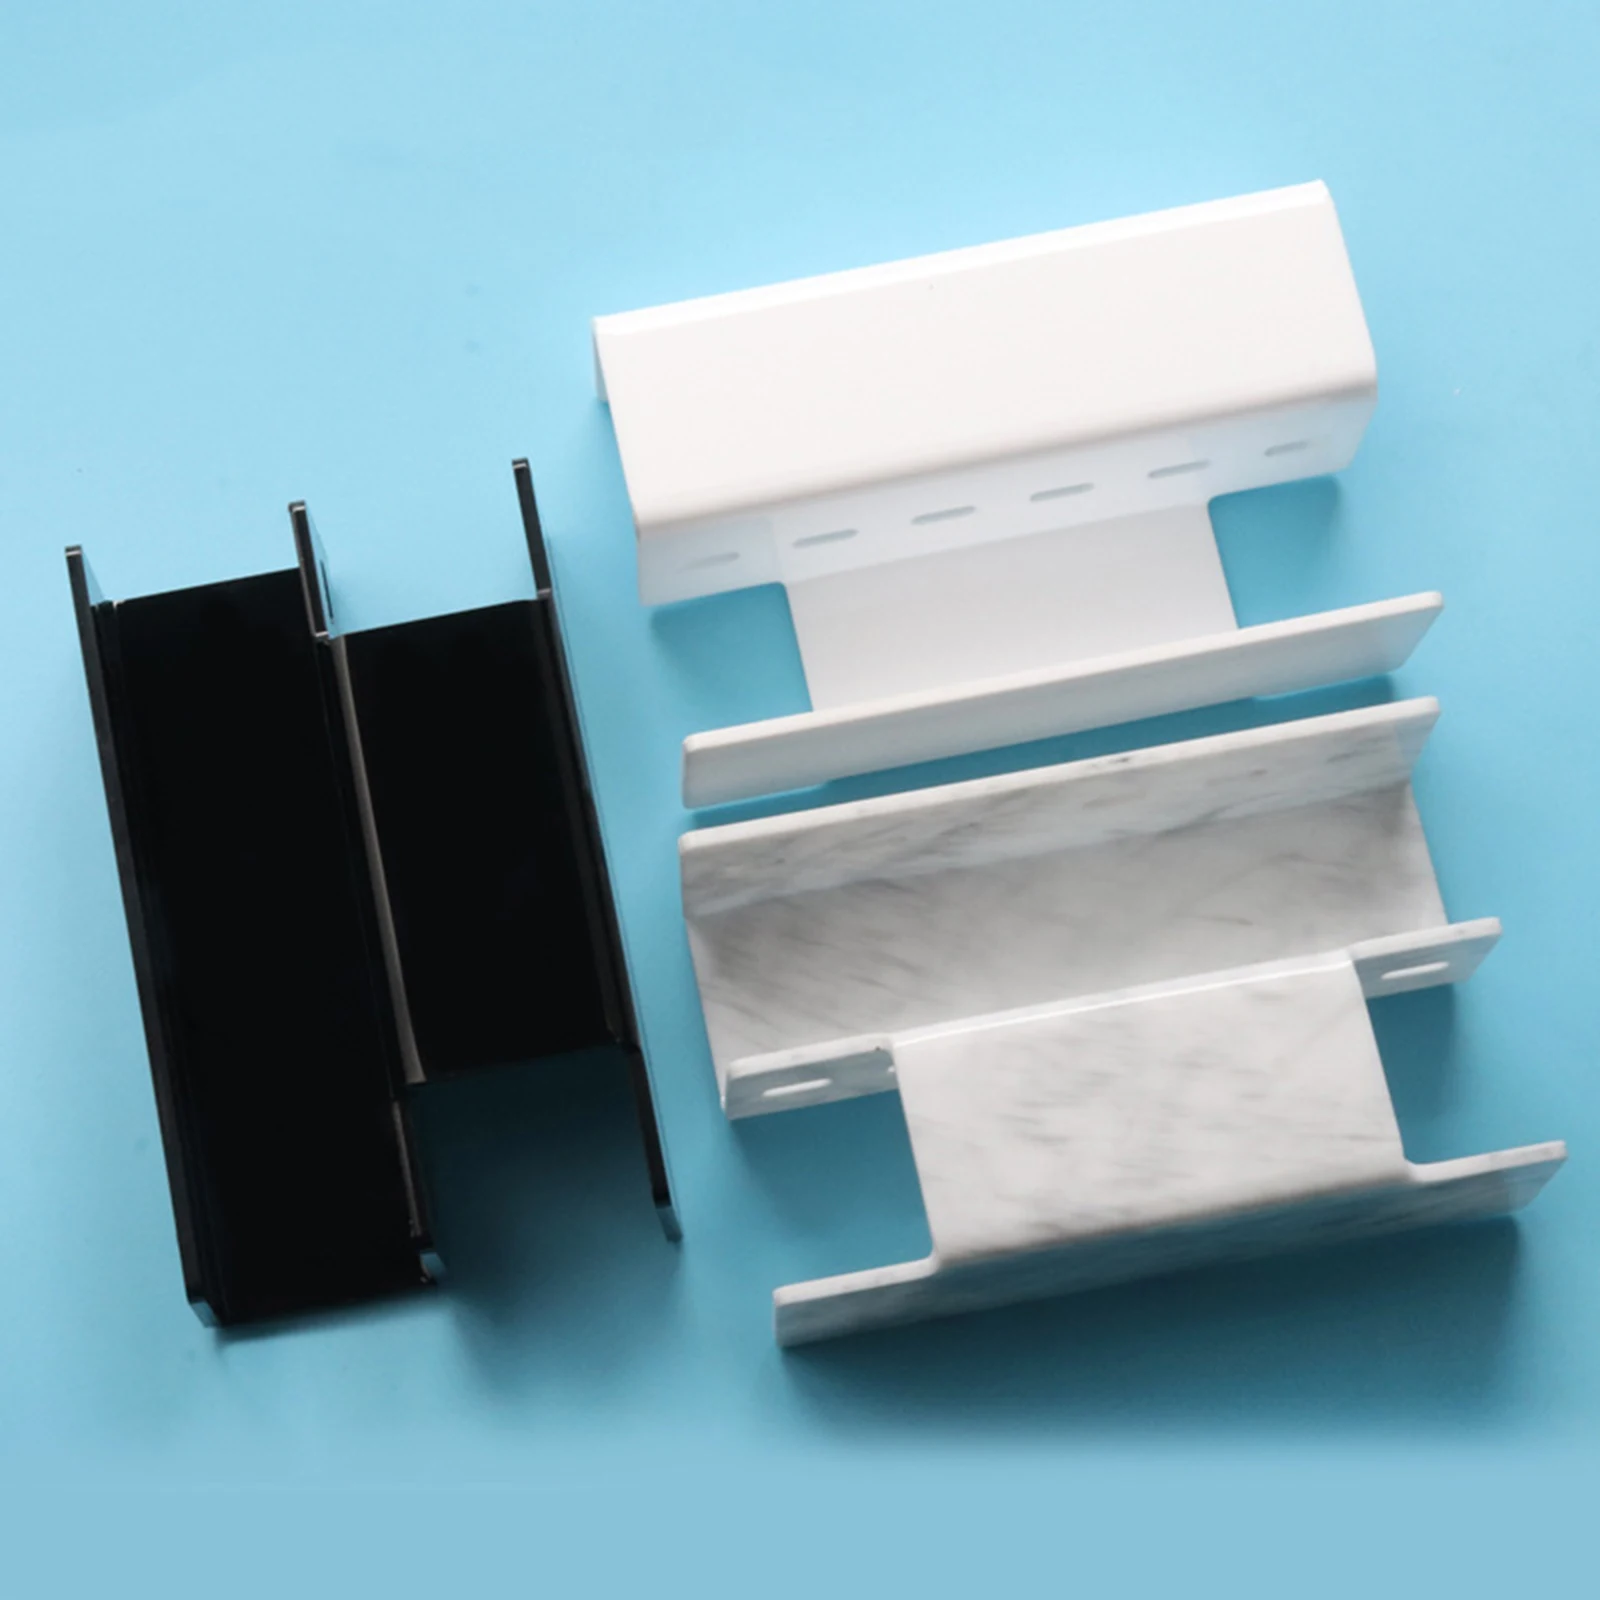 6 Hole Tweezers Shelf Holder Acrylic Display Stand for Eyelash Extension